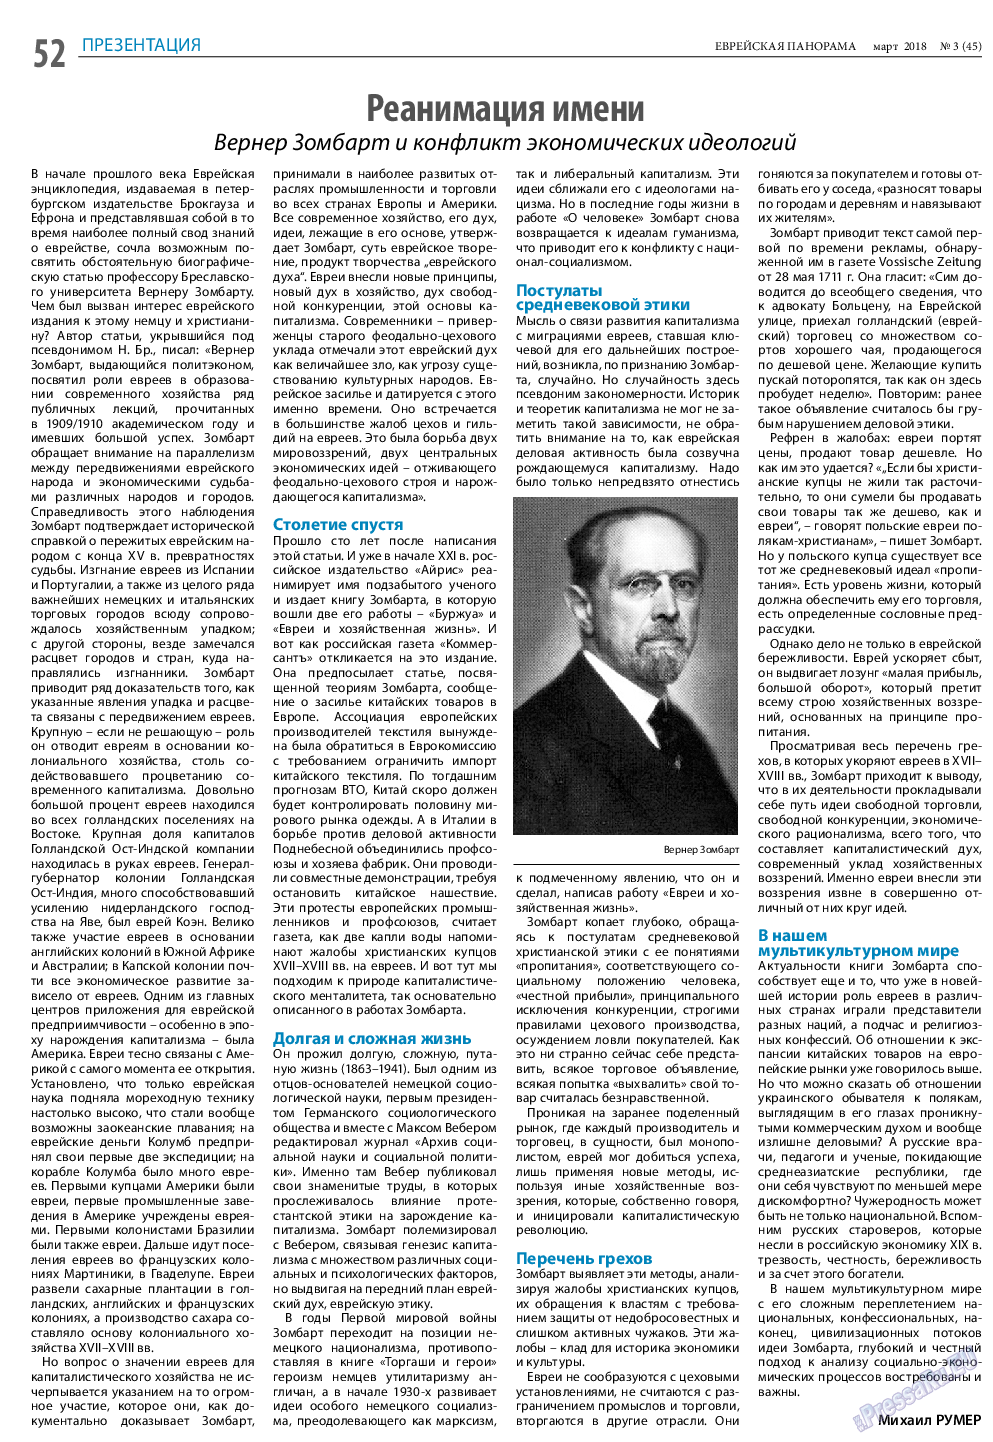 Еврейская панорама, газета. 2018 №3 стр.52